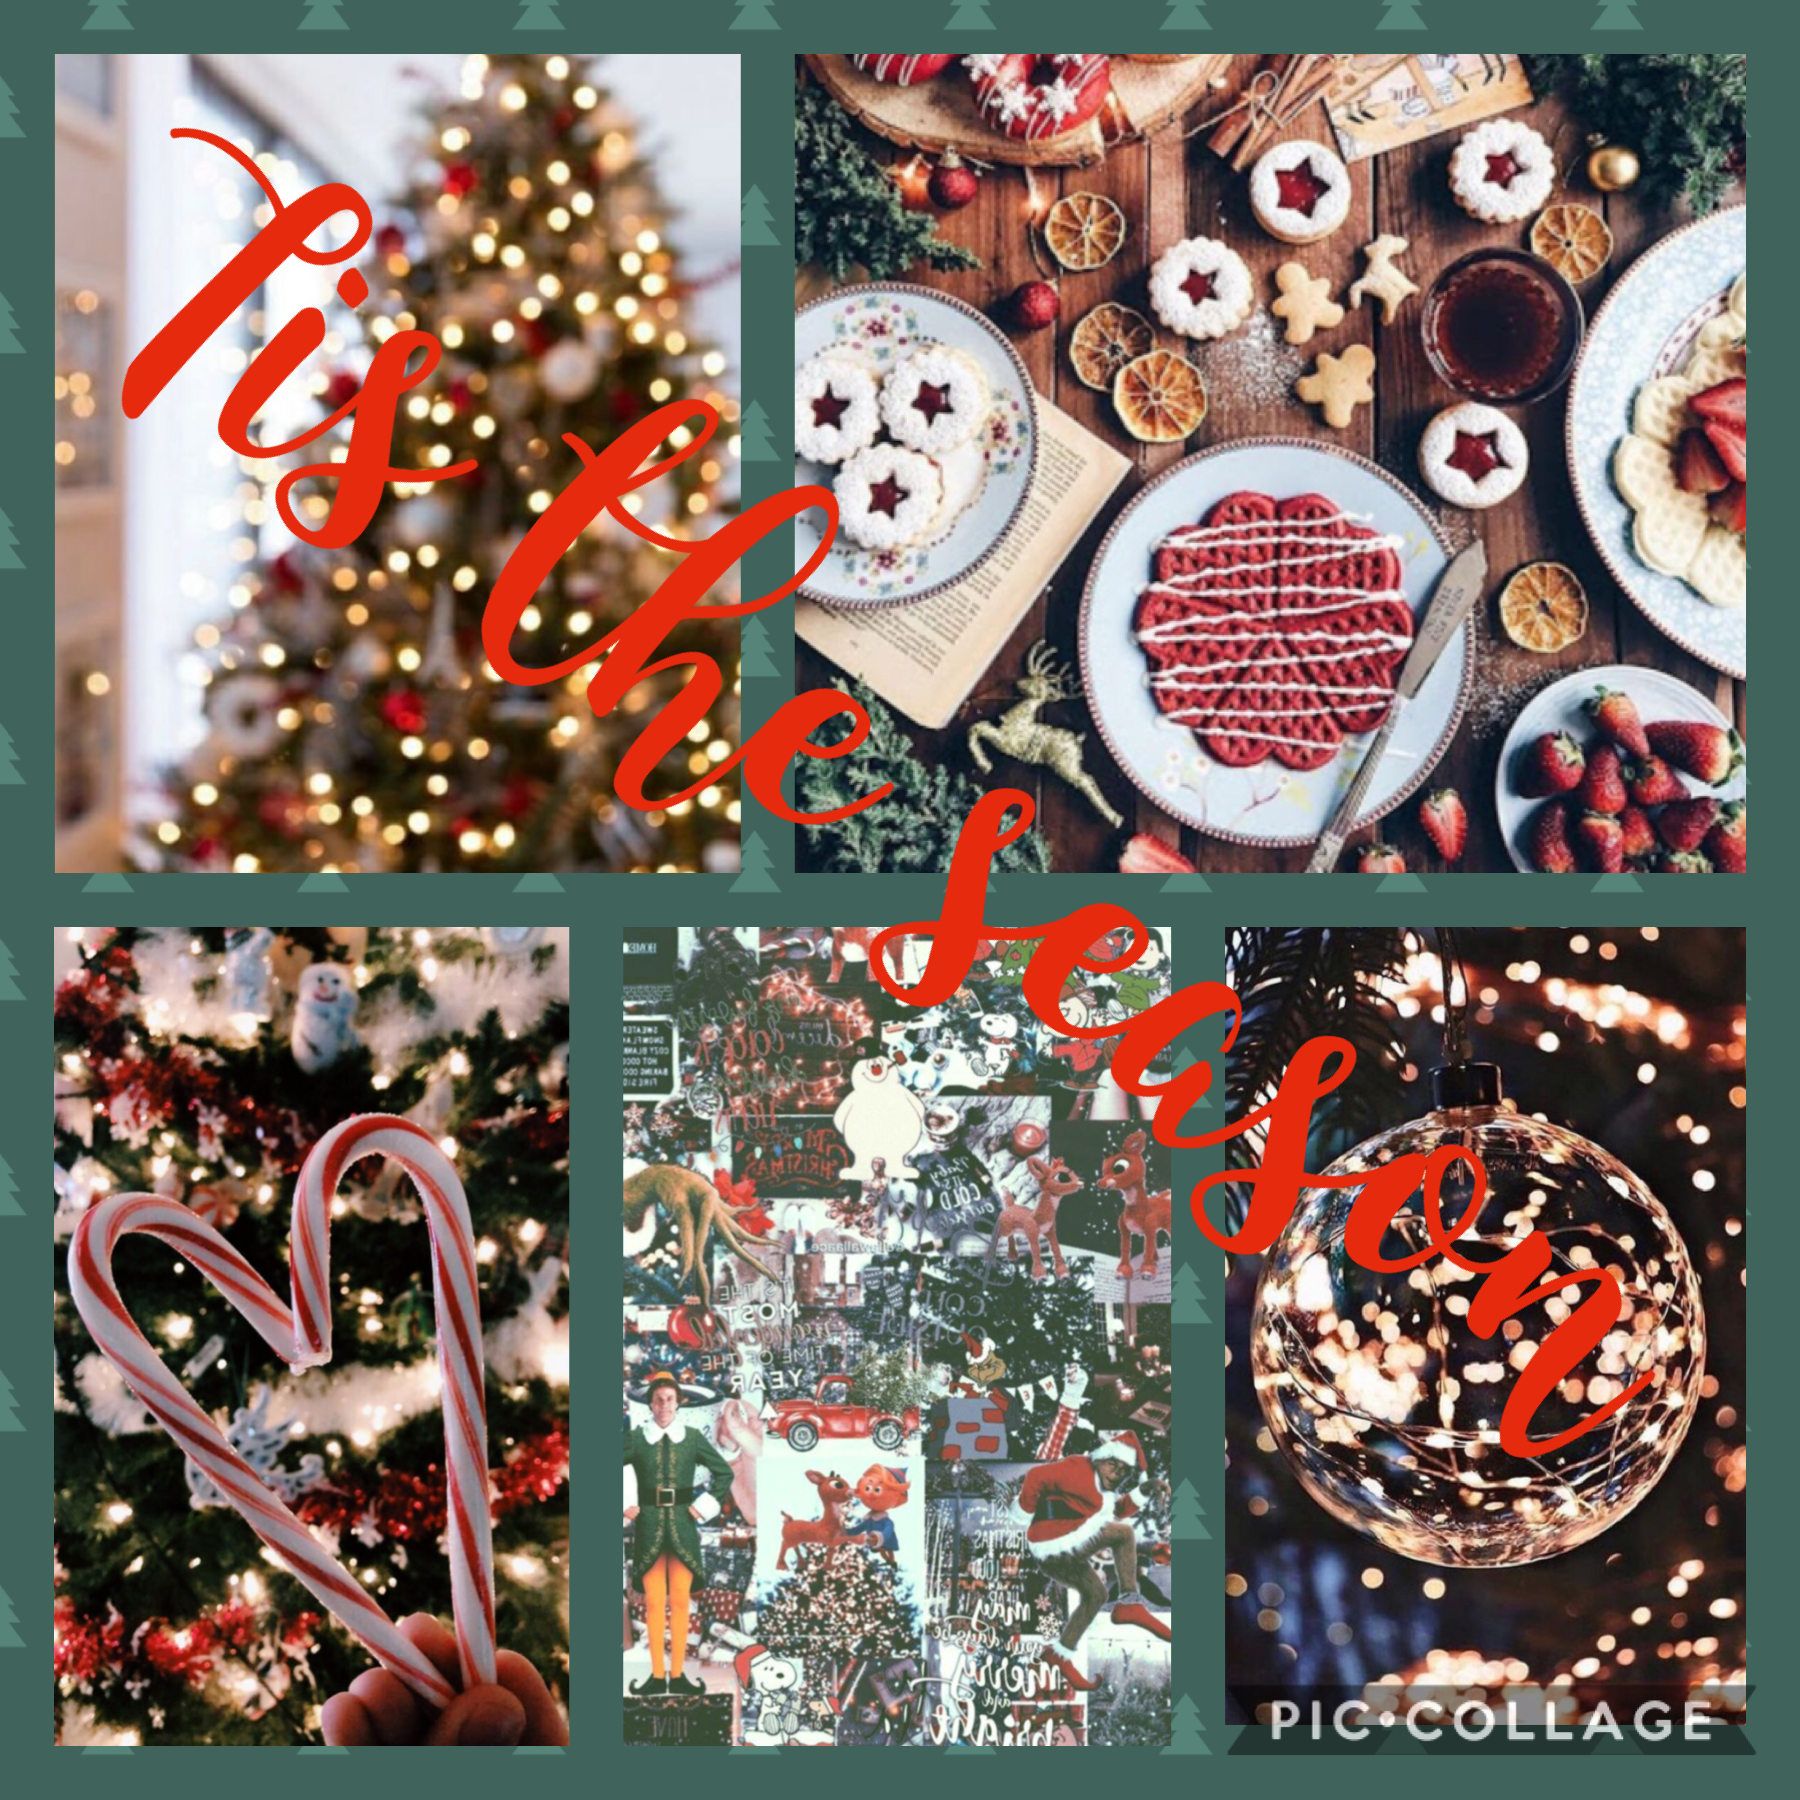 Reposting my favorite Christmas collage!